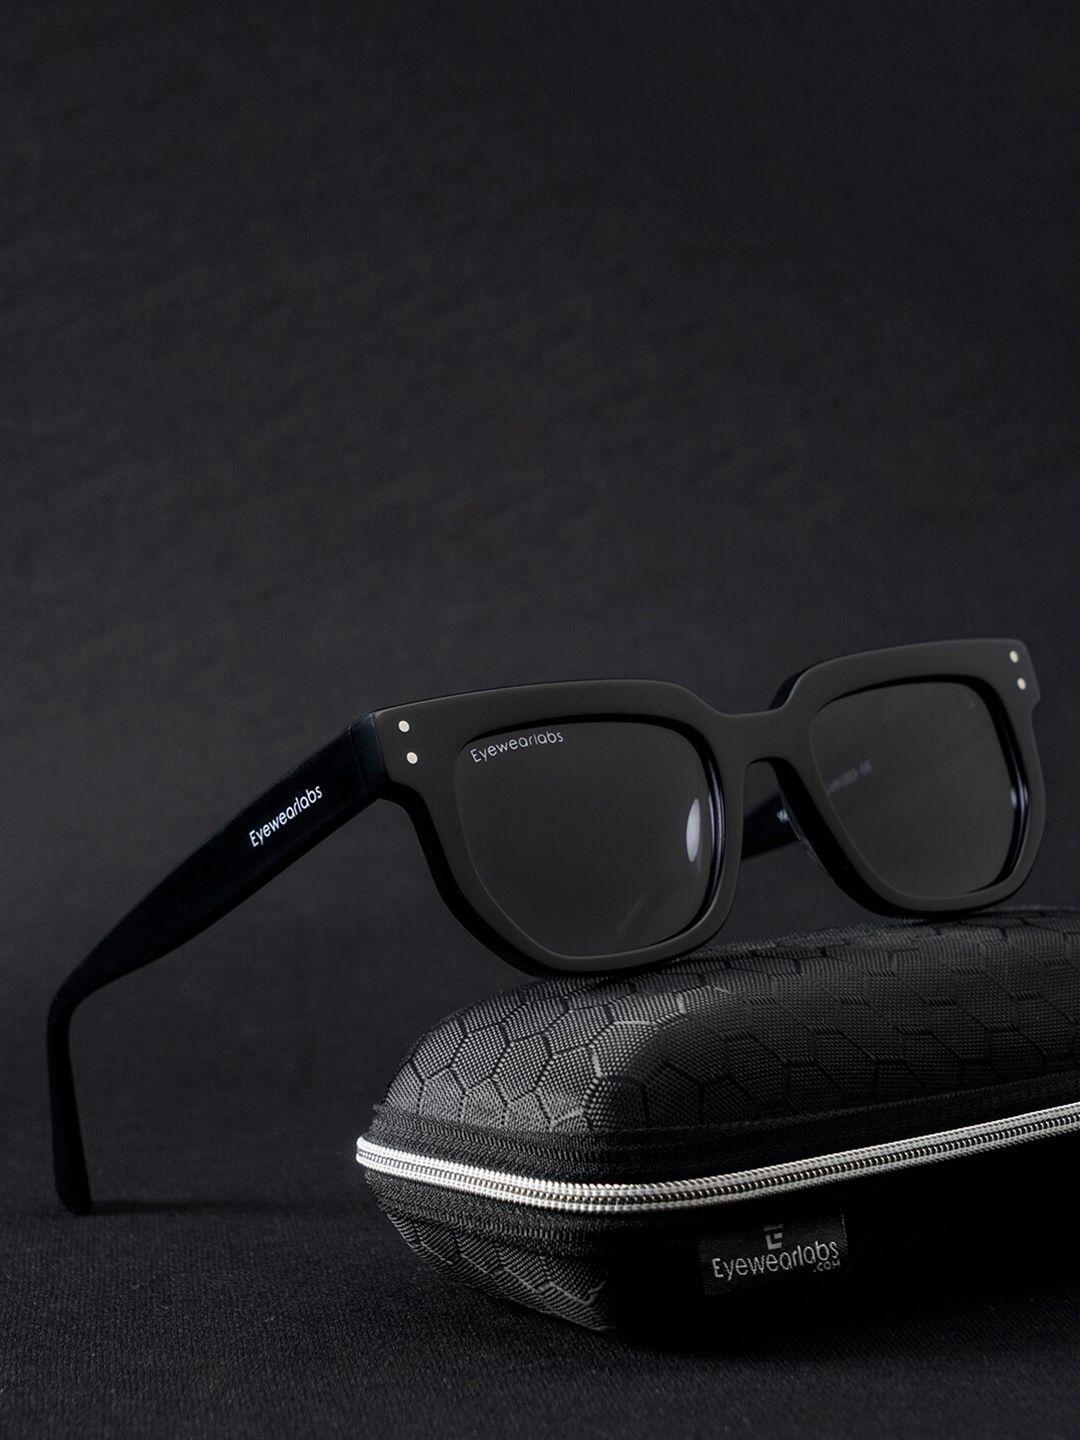 eyewearlabs women lens & wayfarer sunglasses with uv protected lens clisapksc1el1181